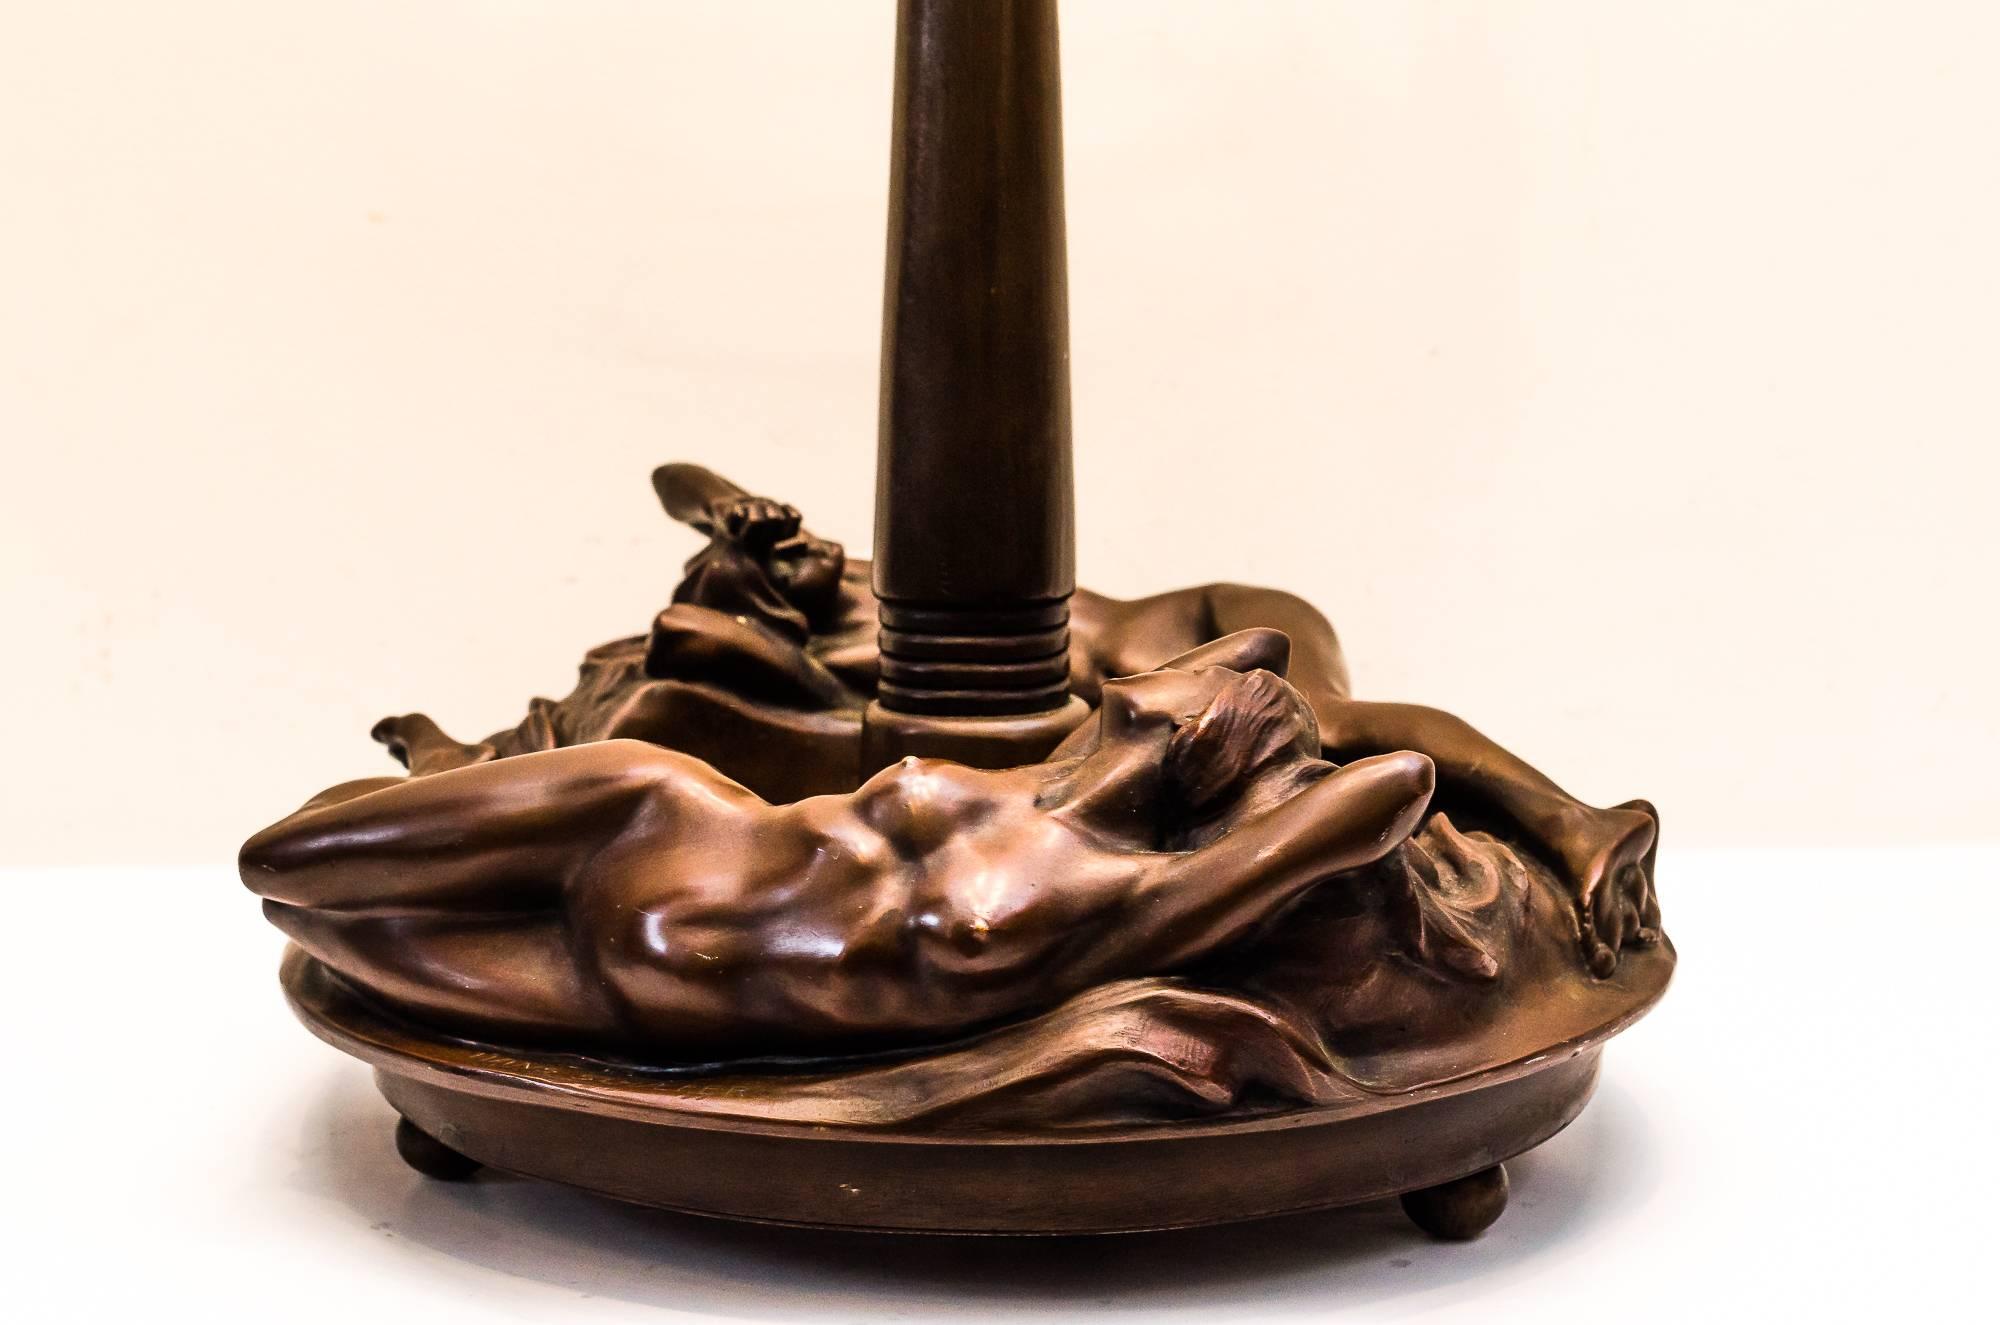 Original Art Nouveau bronze Lamp with lying nudes created between 1900 -1920s by renowed american-austrian sculptor and medailleur Hans Schaefer (1875 Sternberg/Mähren - 1933 Chicago/USA). The sculptor studied by M: Marschall and Stefan Schwartz in